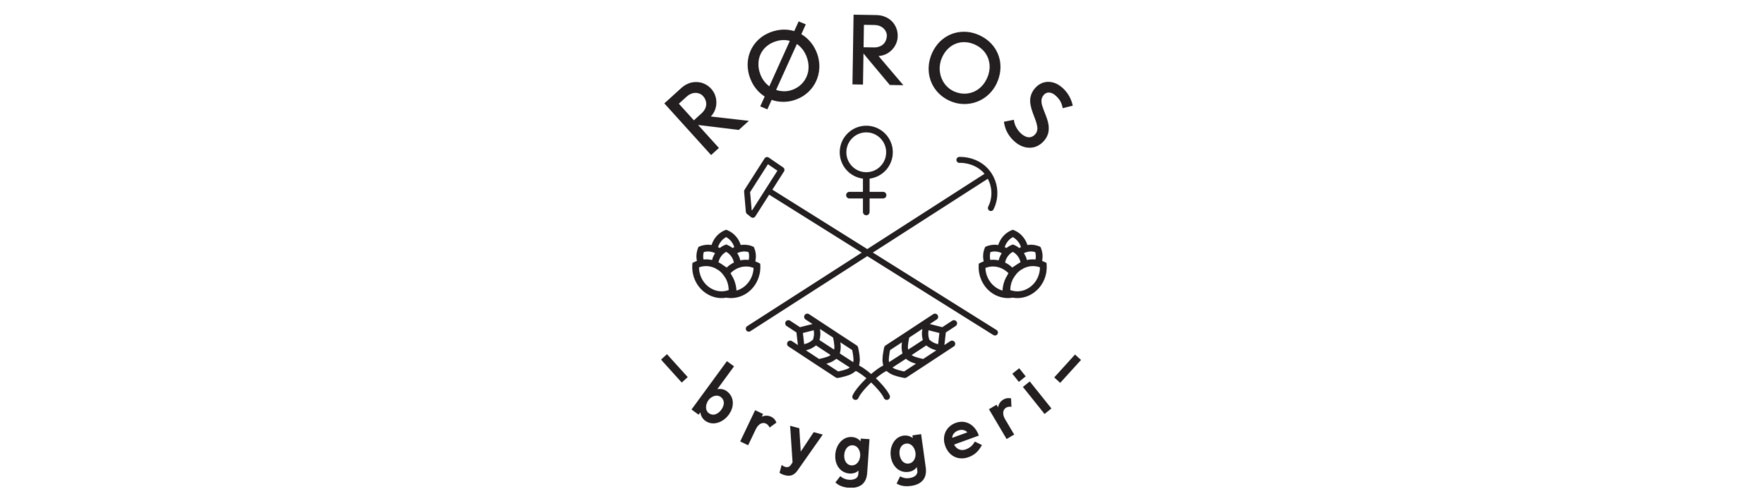 roros_bryggeri